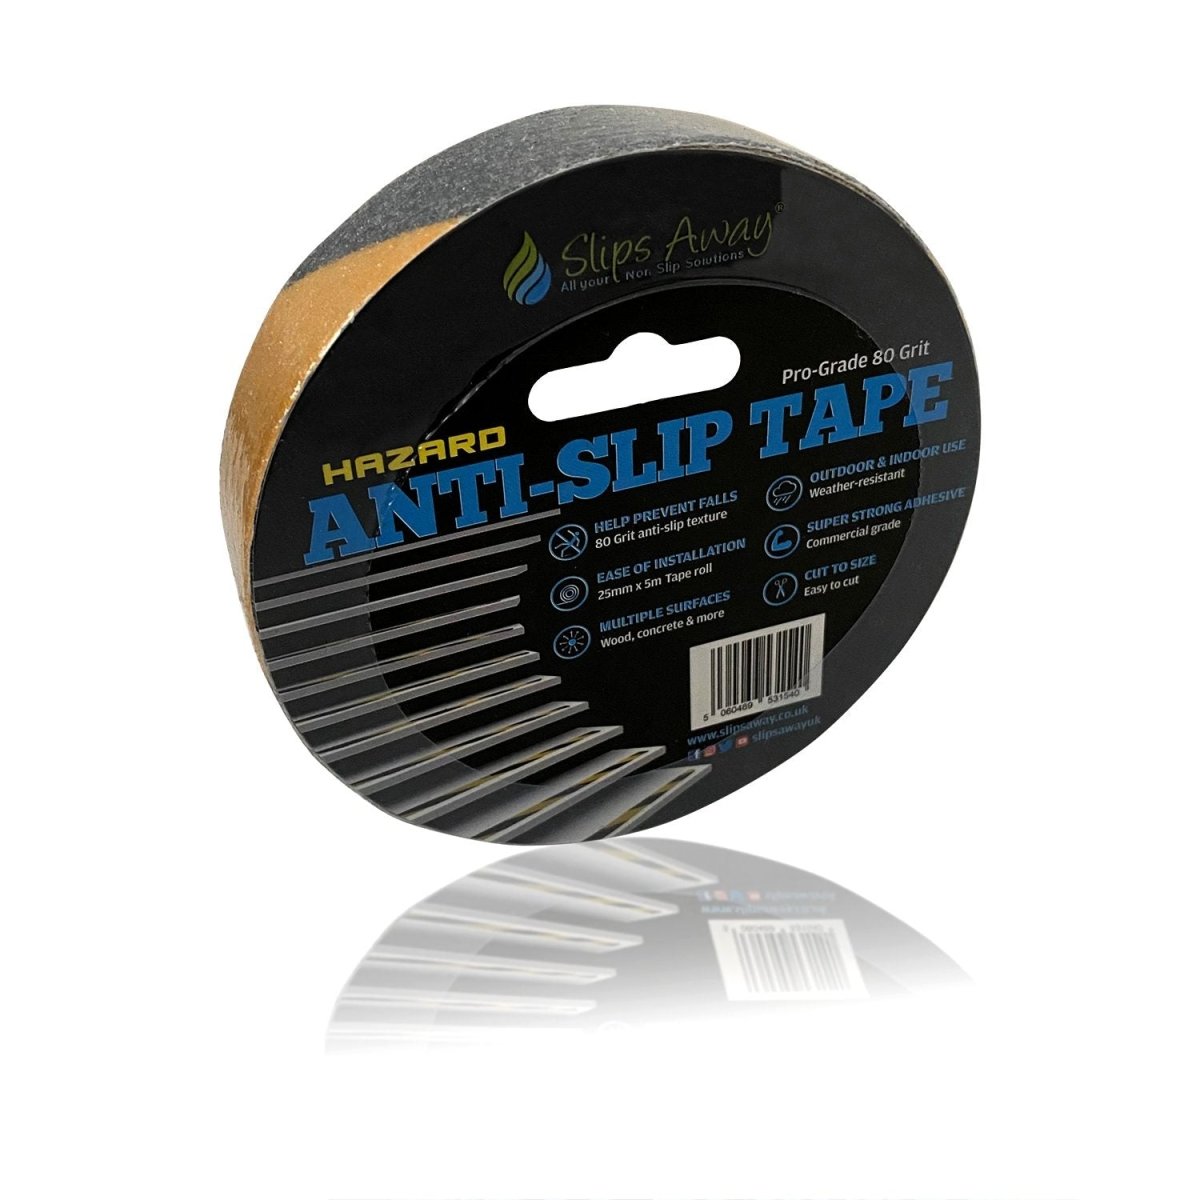 Hazard Tape Yellow & Black 80 Grit Texture - 1" x 5 meters - Slips Away - SA050. -